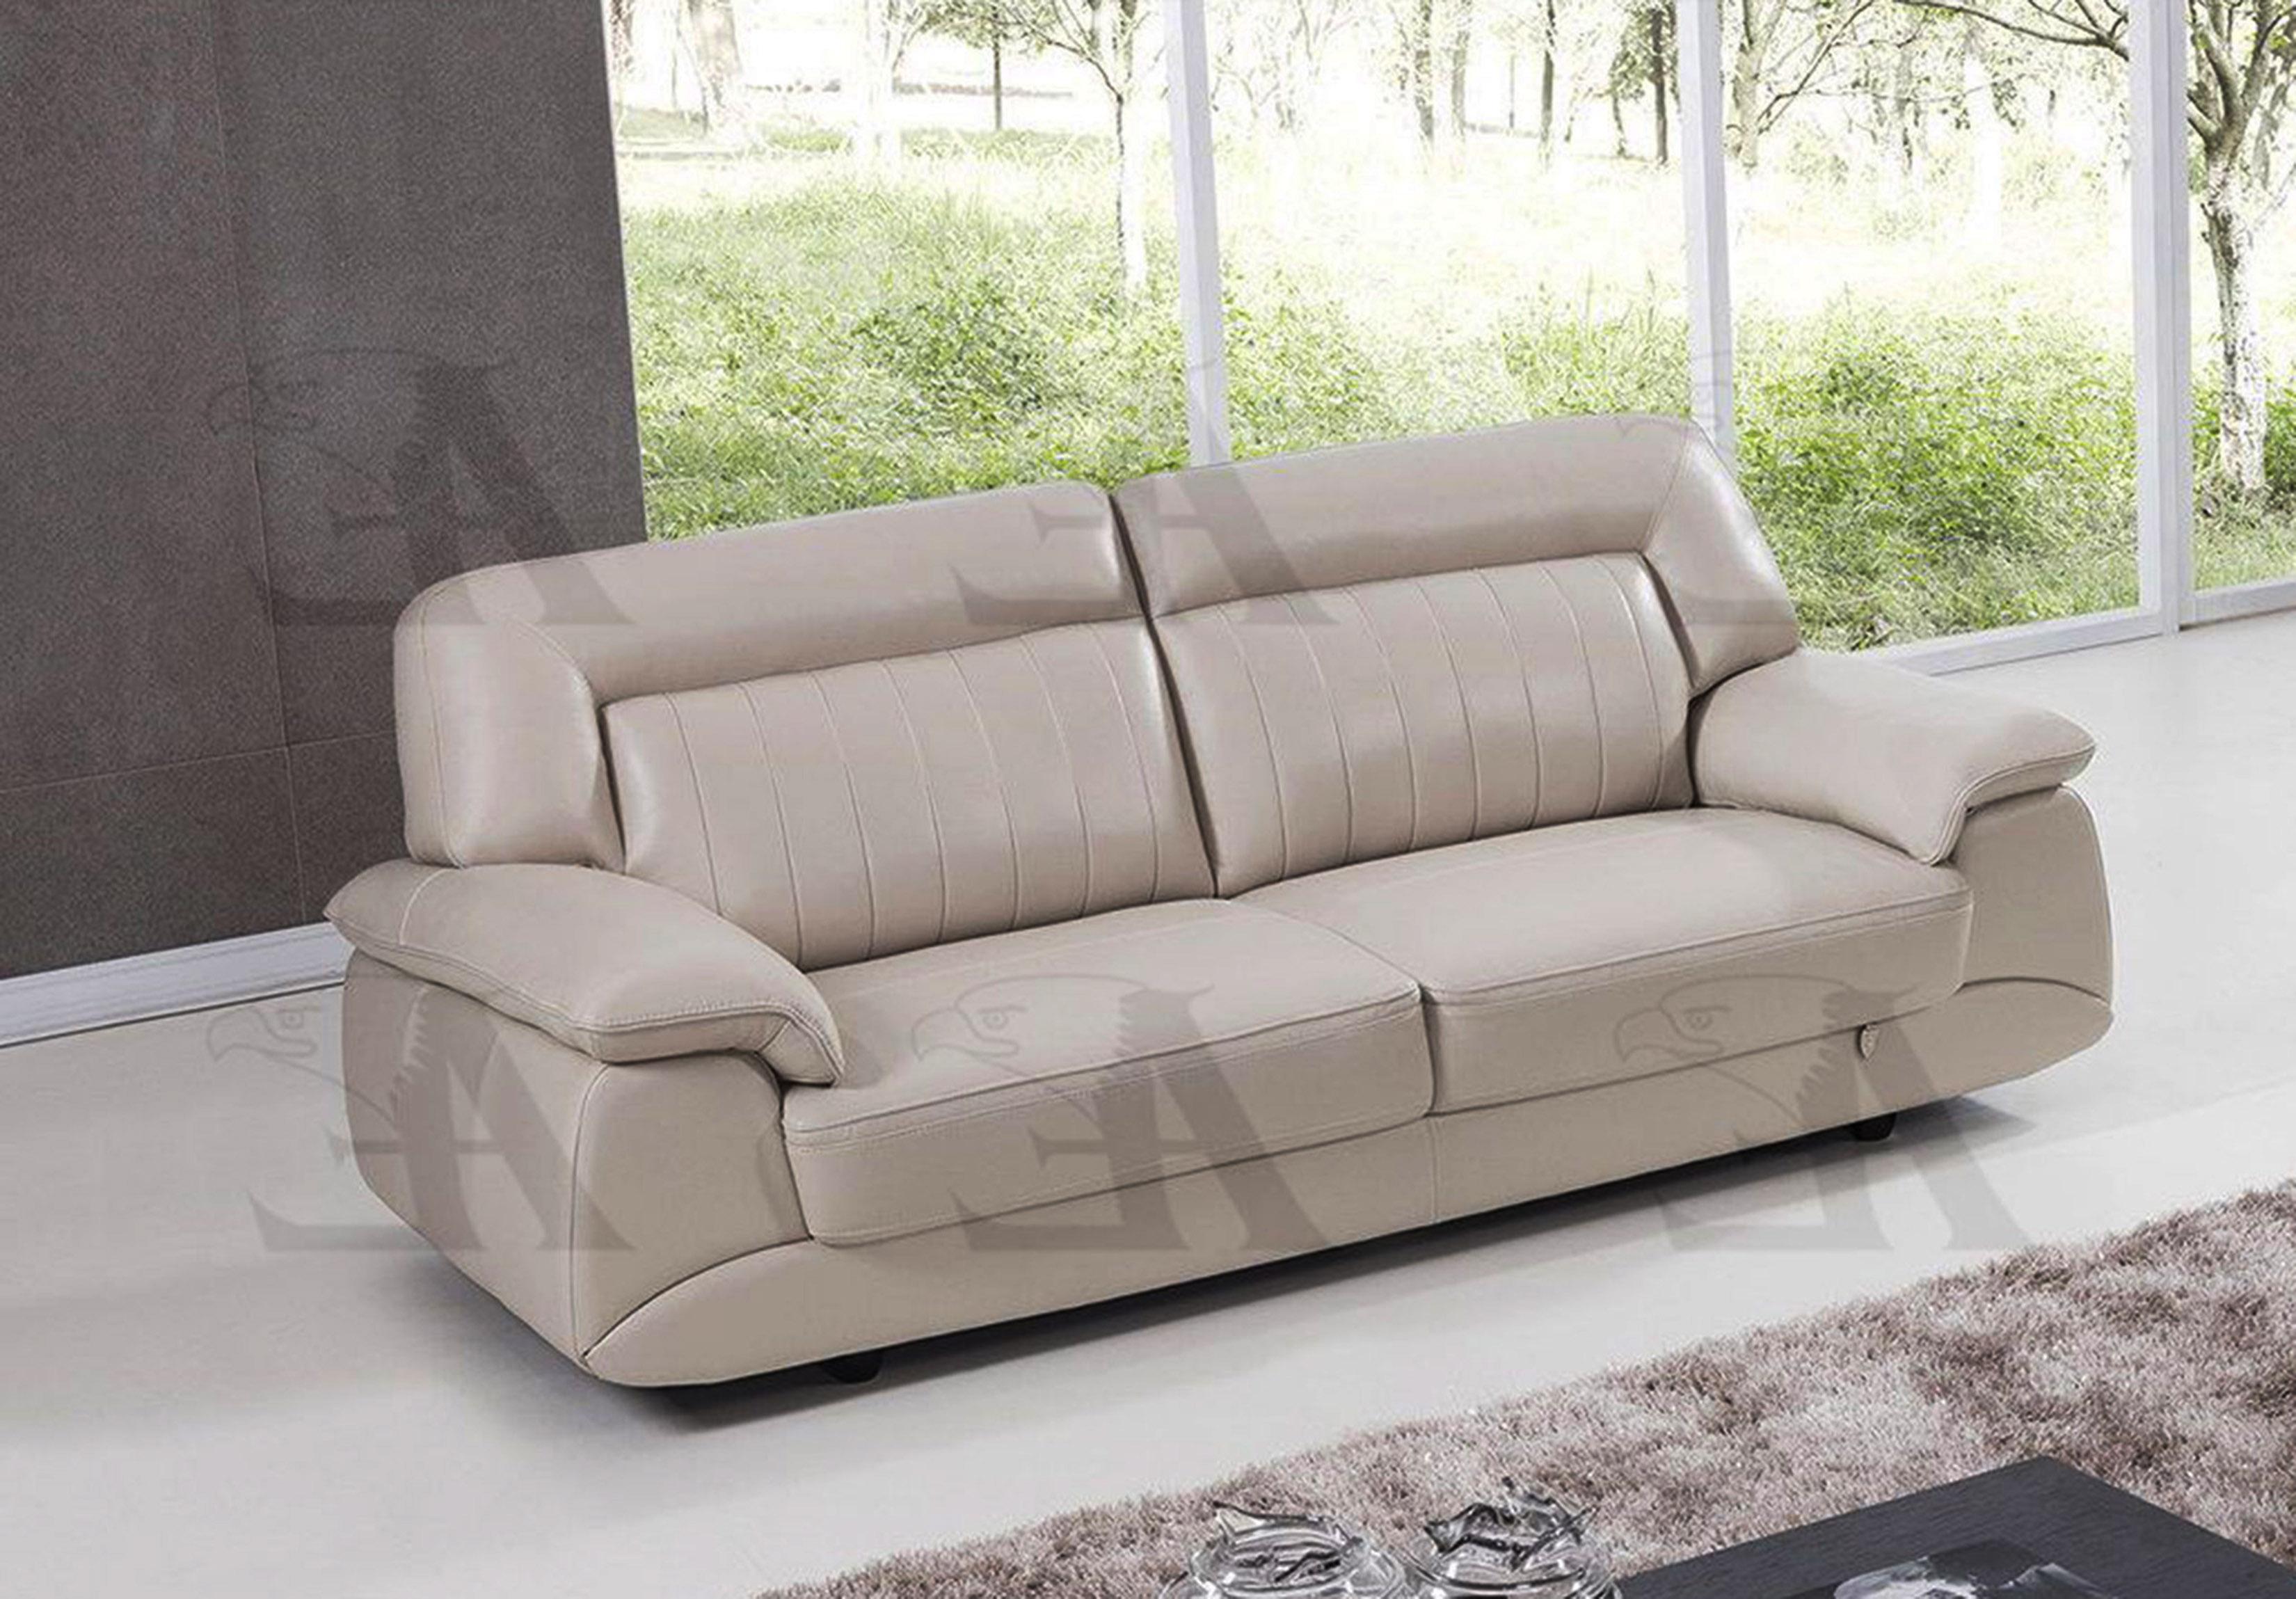 

    
American Eagle Furniture EK072-LG Sofa Light Gray EK072-LG
